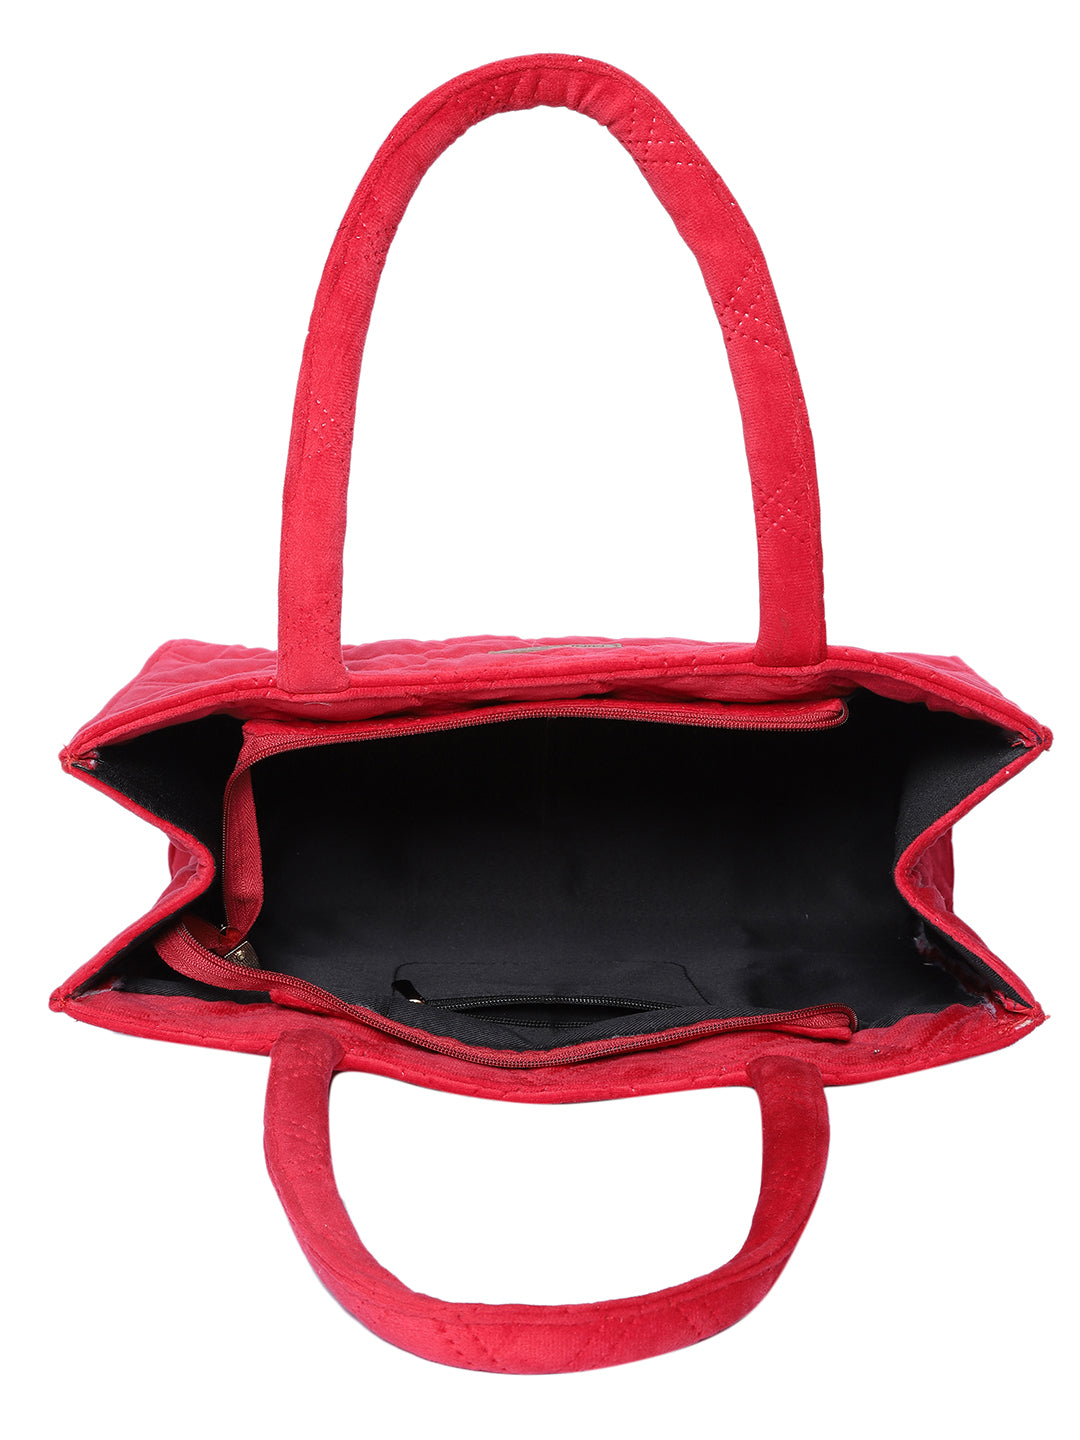 MINI WESST Women's Red Tote Bag